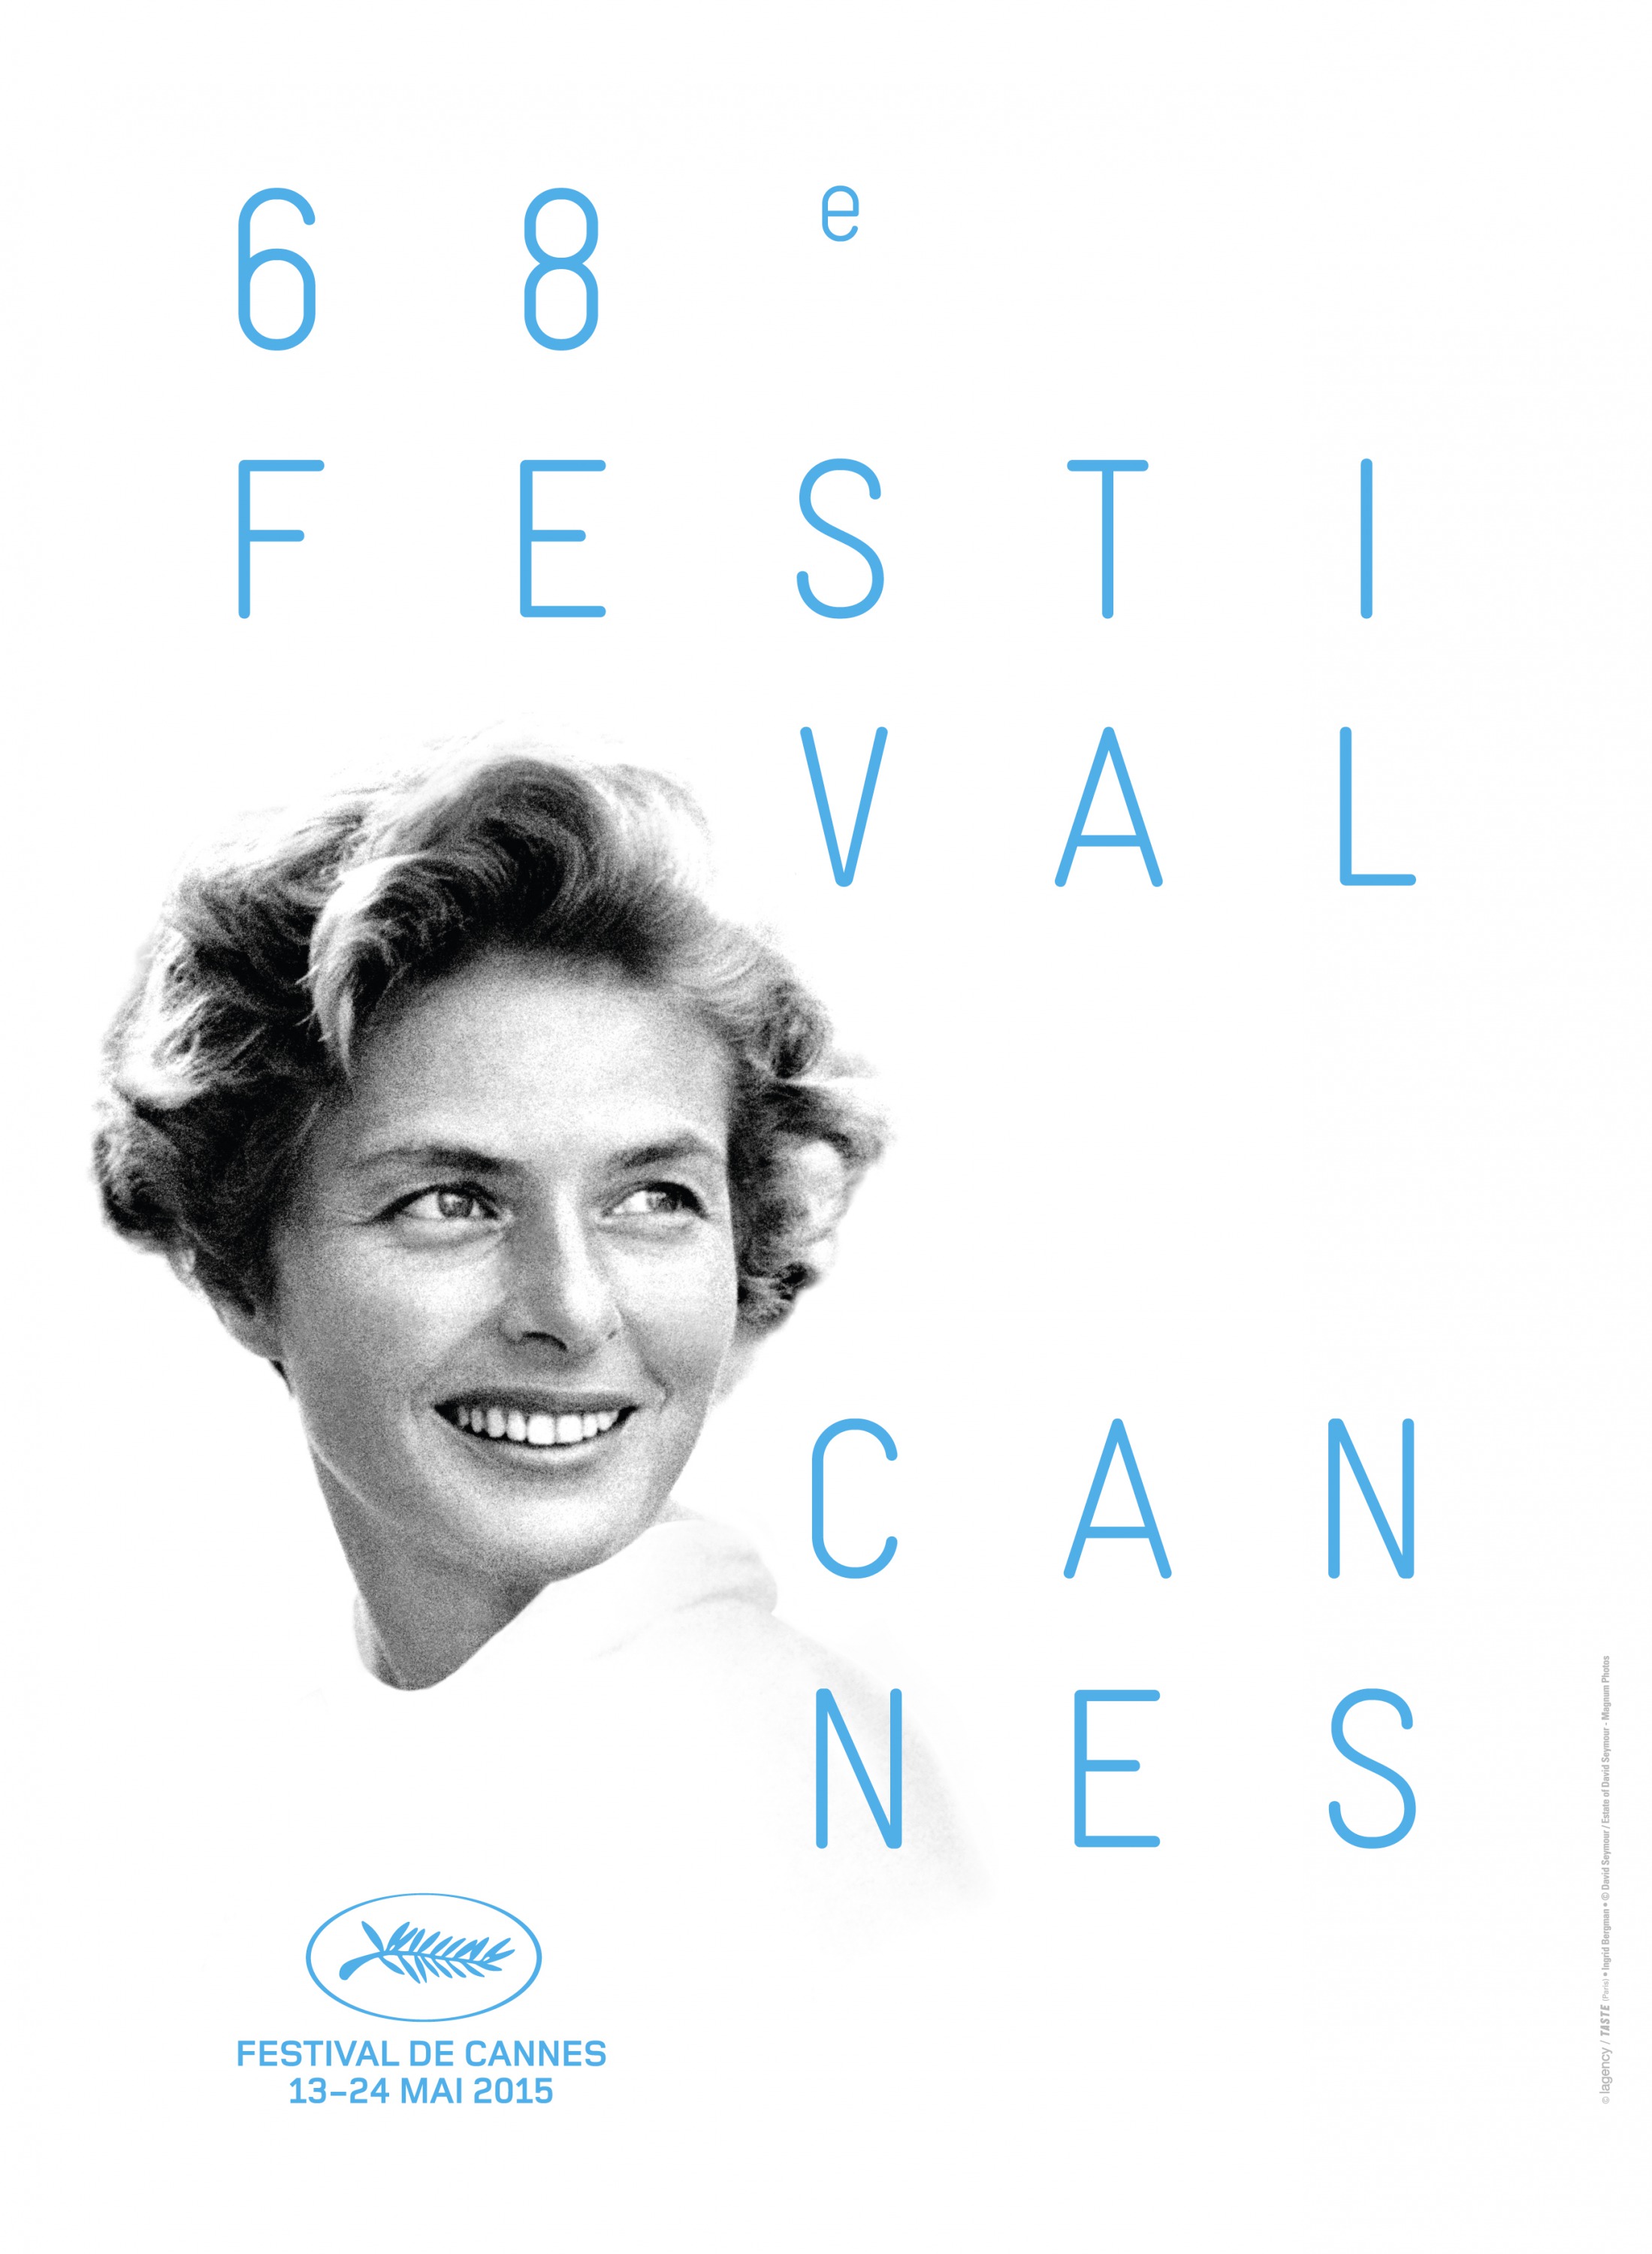 Mega Sized TV Poster Image for Cannes International Film Festival (#5 of 8)